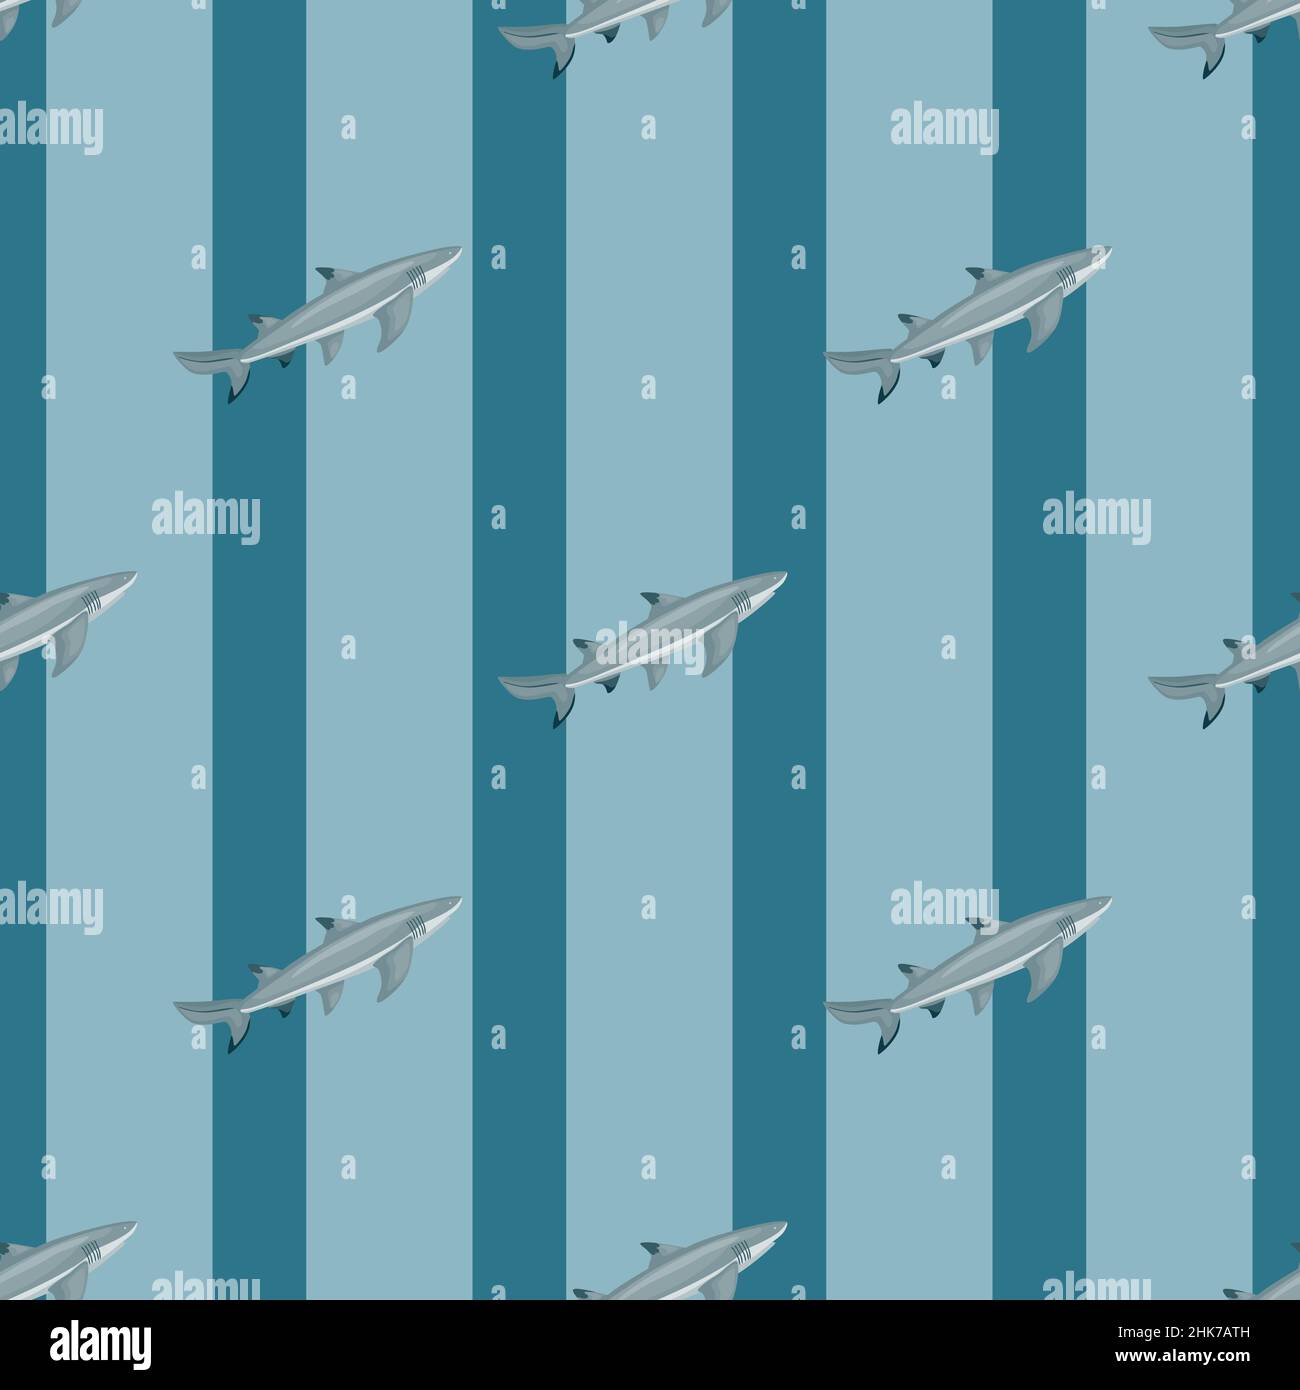 Lemon shark seamless pattern in scandinavian style. Marine animals background. Vector illustration for children funny textile prints, fabric, banners, Stock Vector